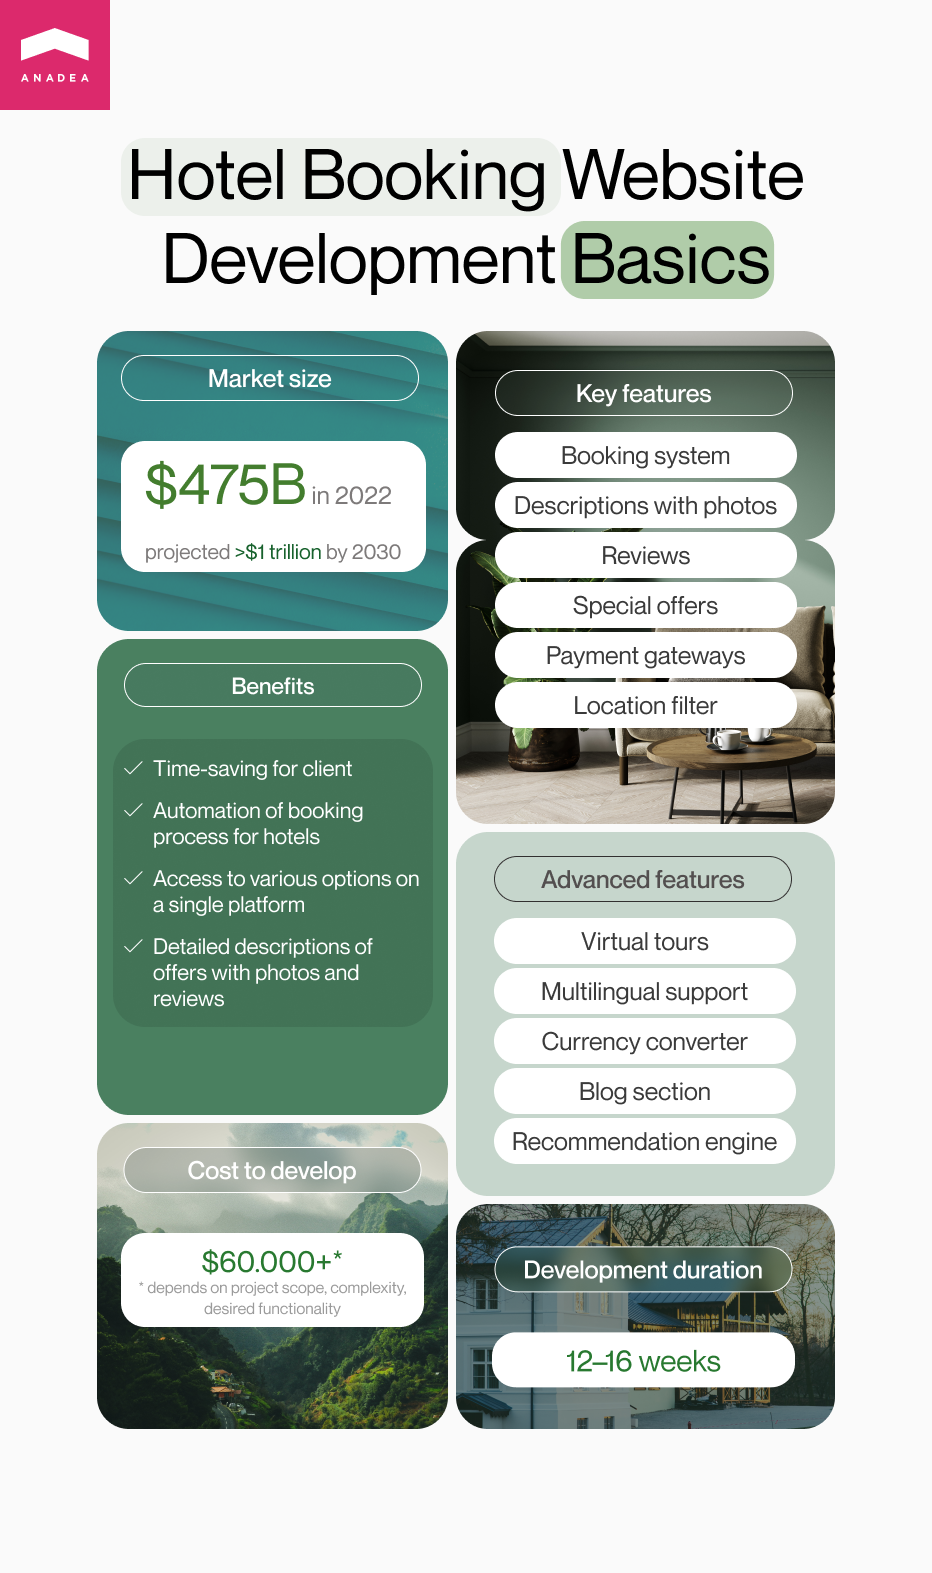 Hotel booking website development infographic - Market size, features, benefits, cost